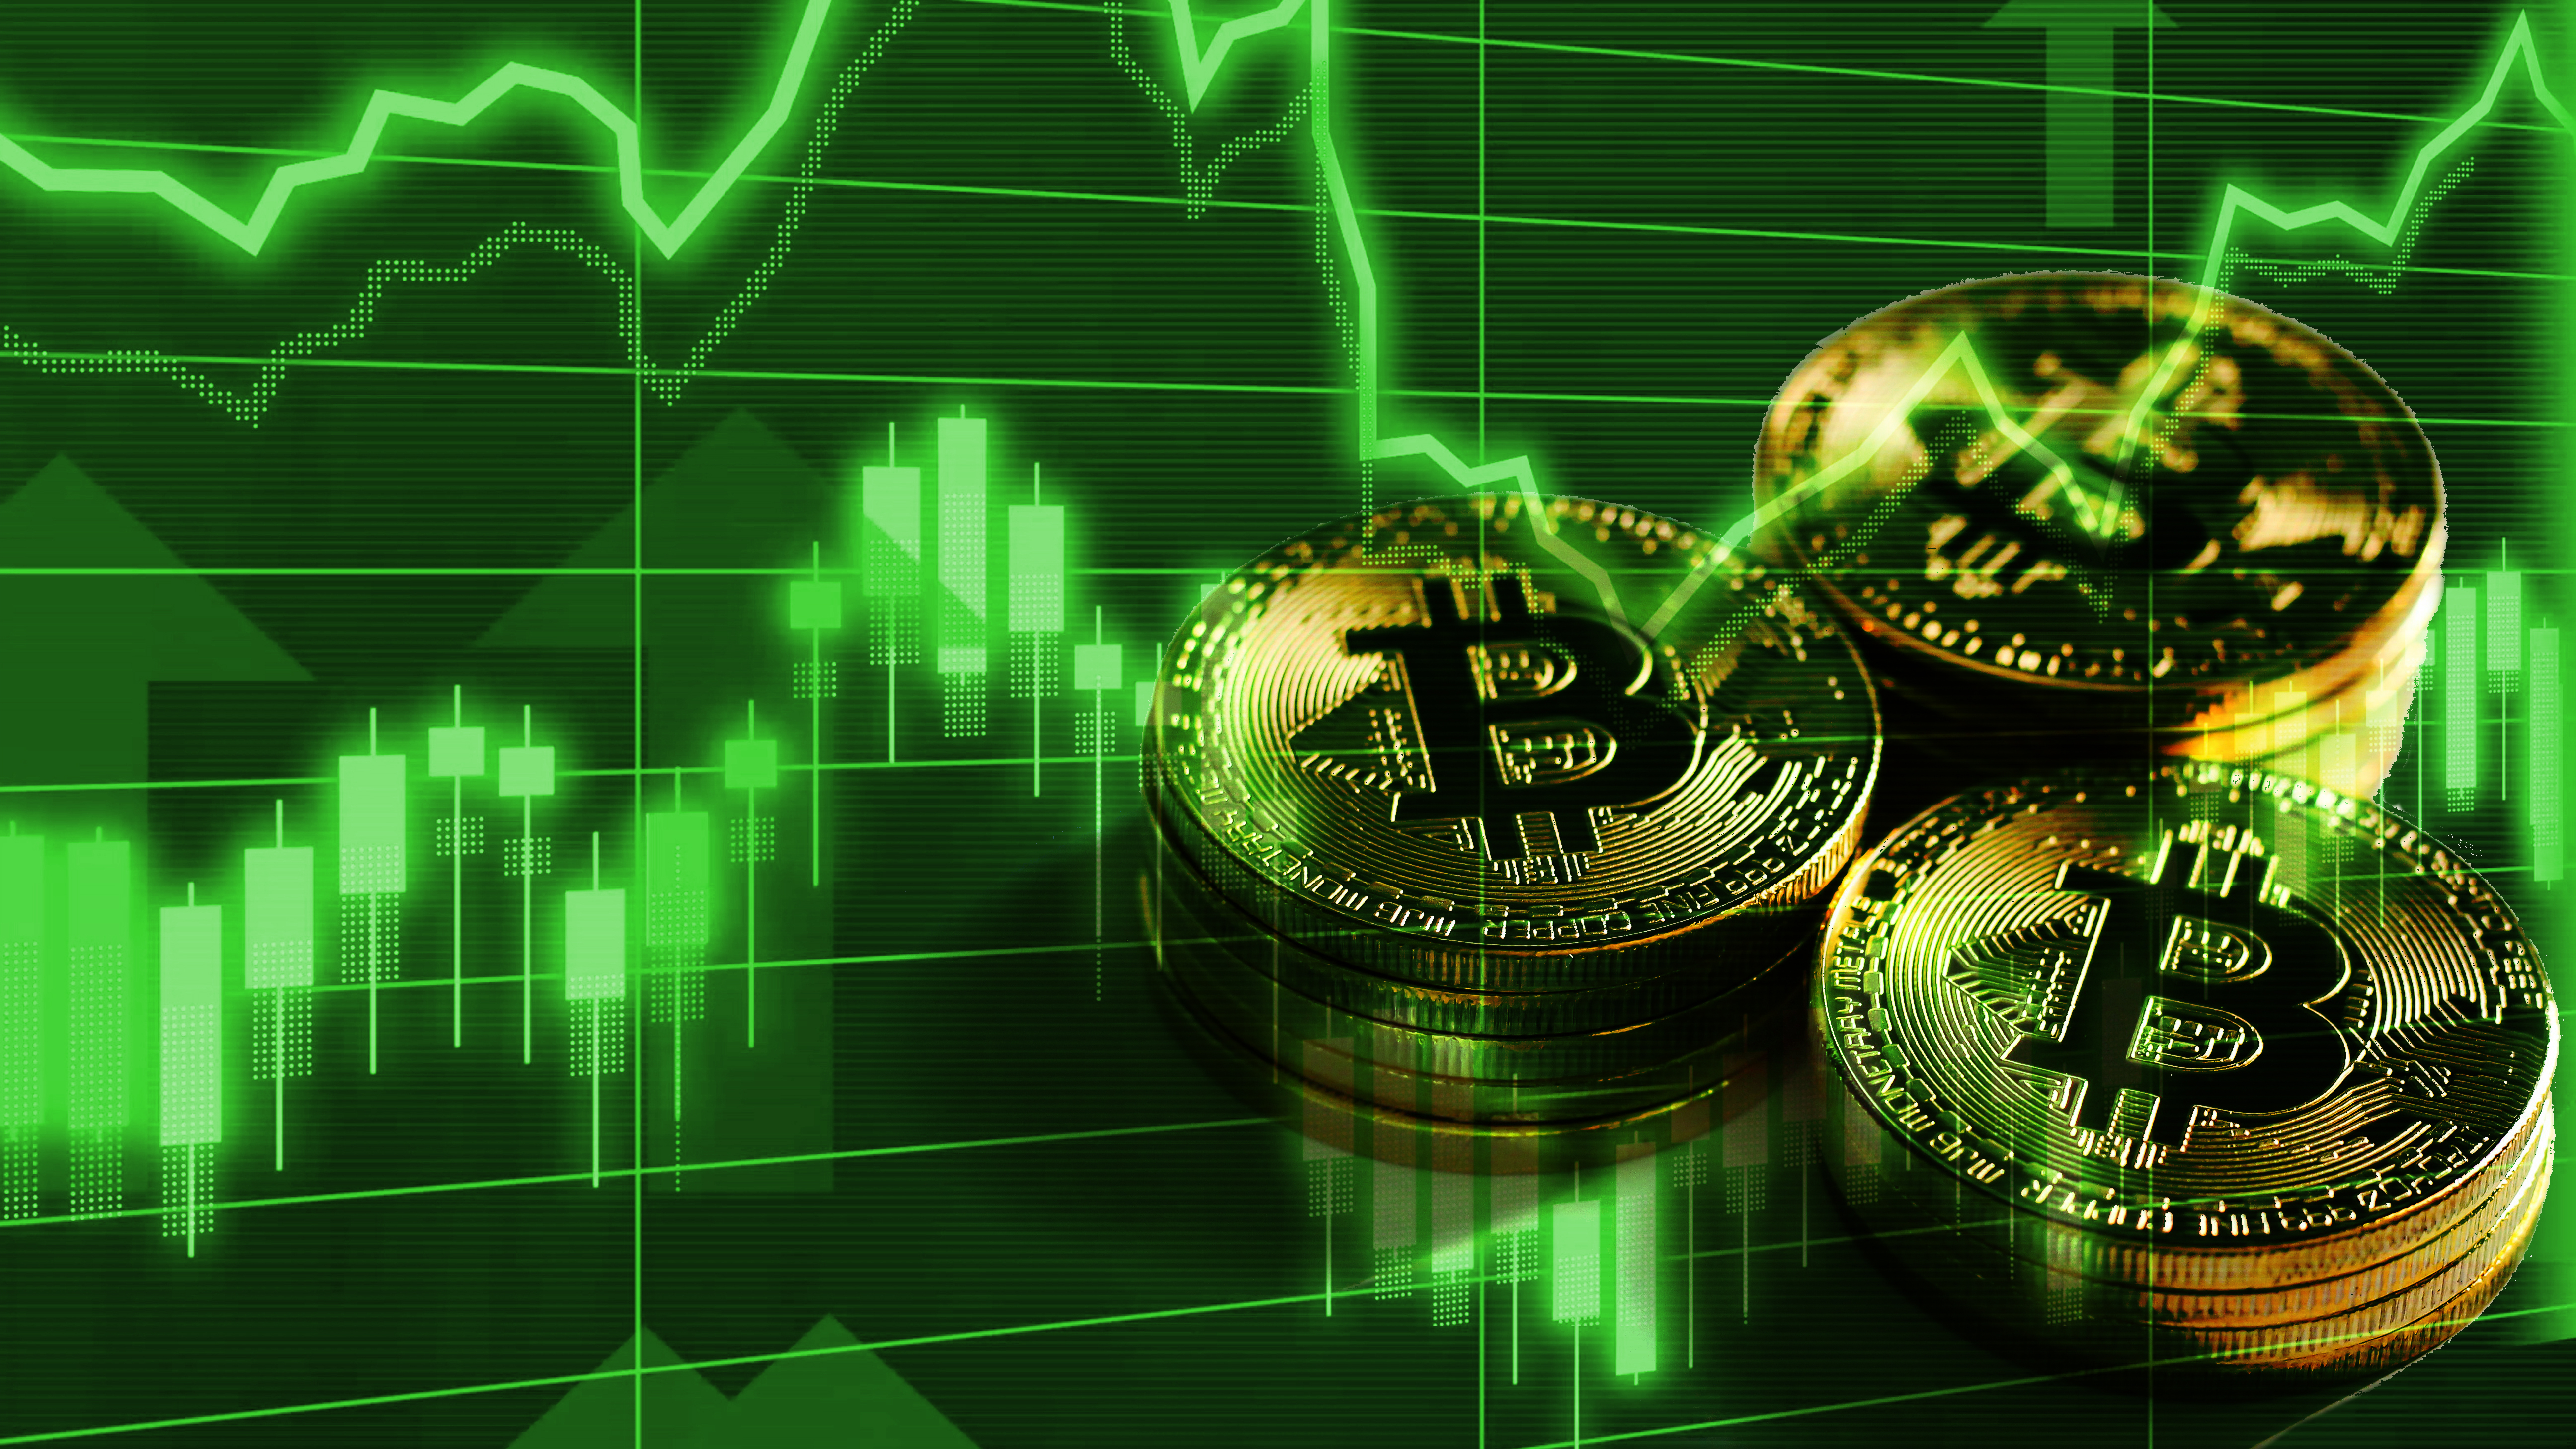 Bitcoin on Green stock market